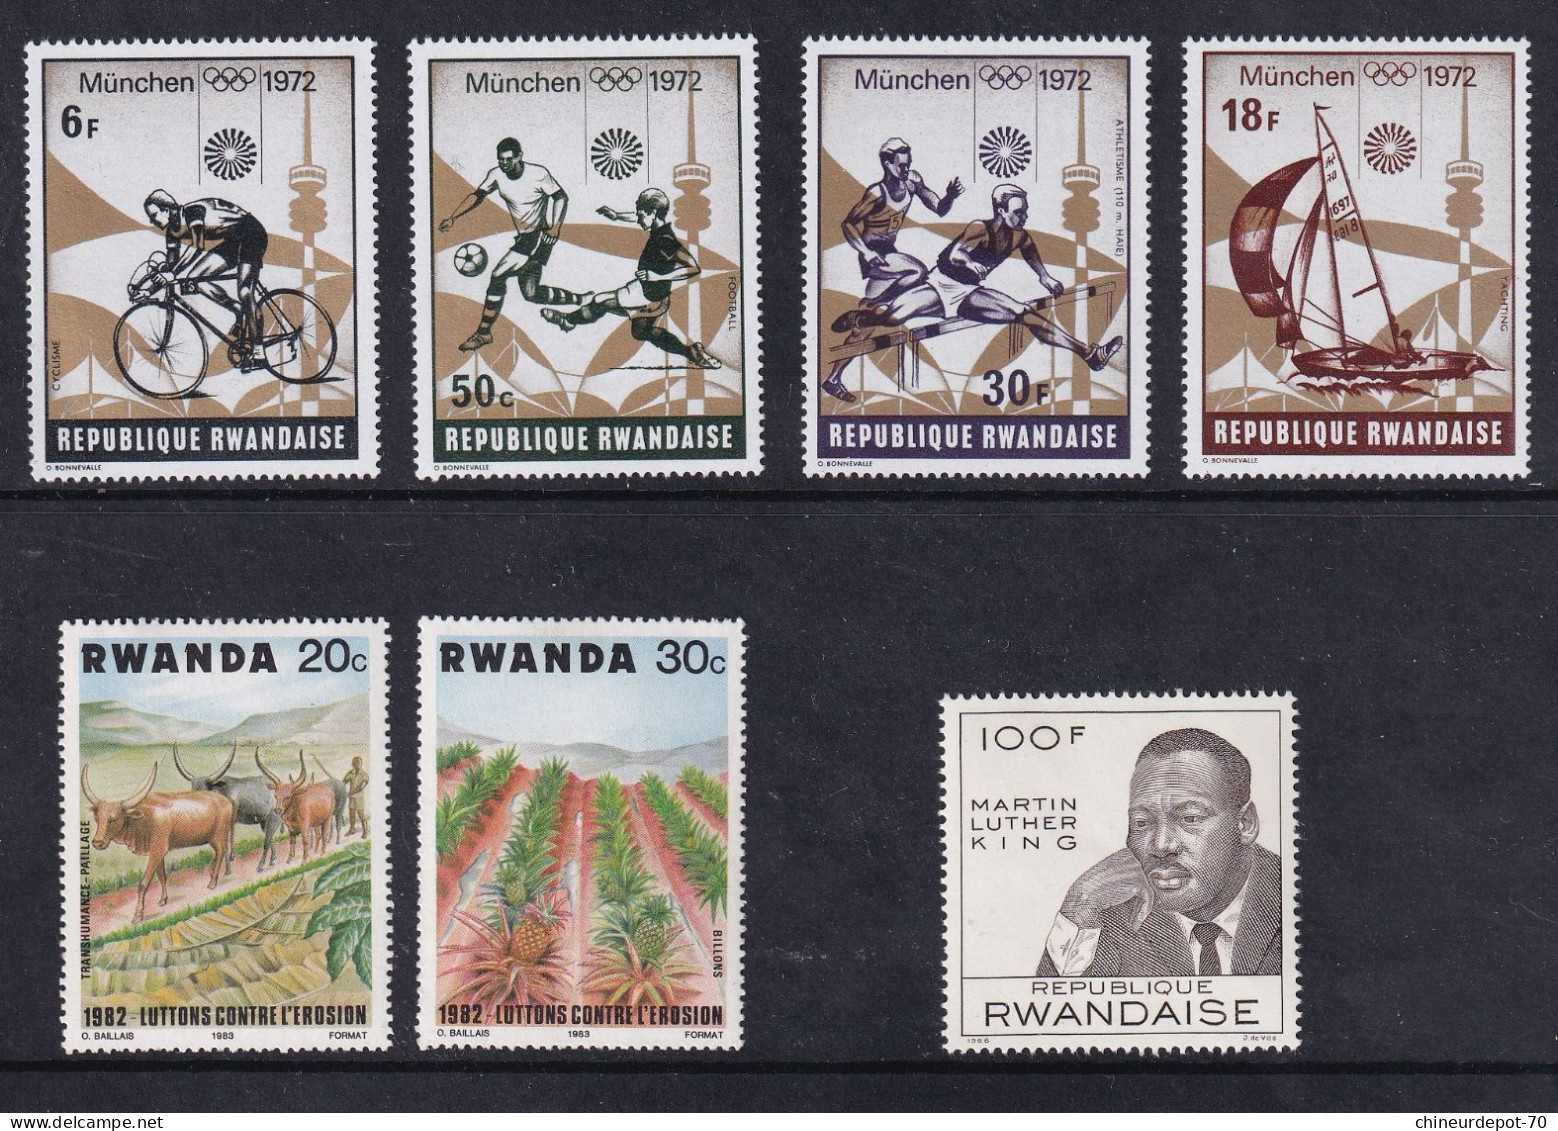 lot de timbres rwanda rwandaise neufs sans charnière ** voir 45 photos **